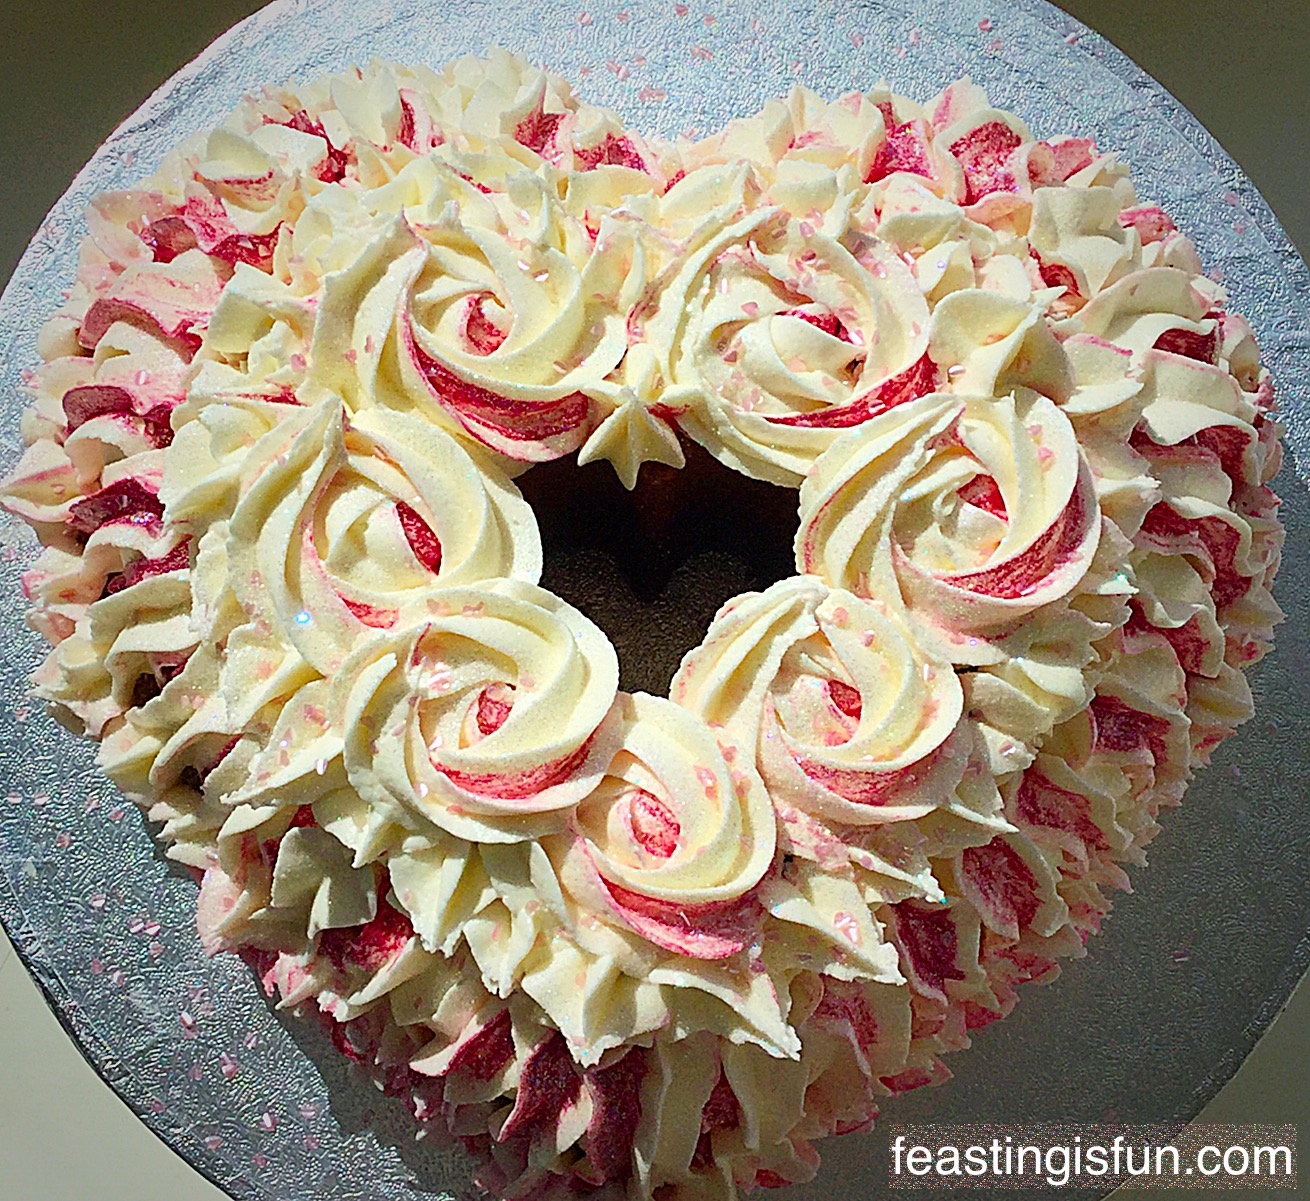 Nordic Ware - Baking Mould Heart Wreath Crochet Tiered Heart Cake Pan